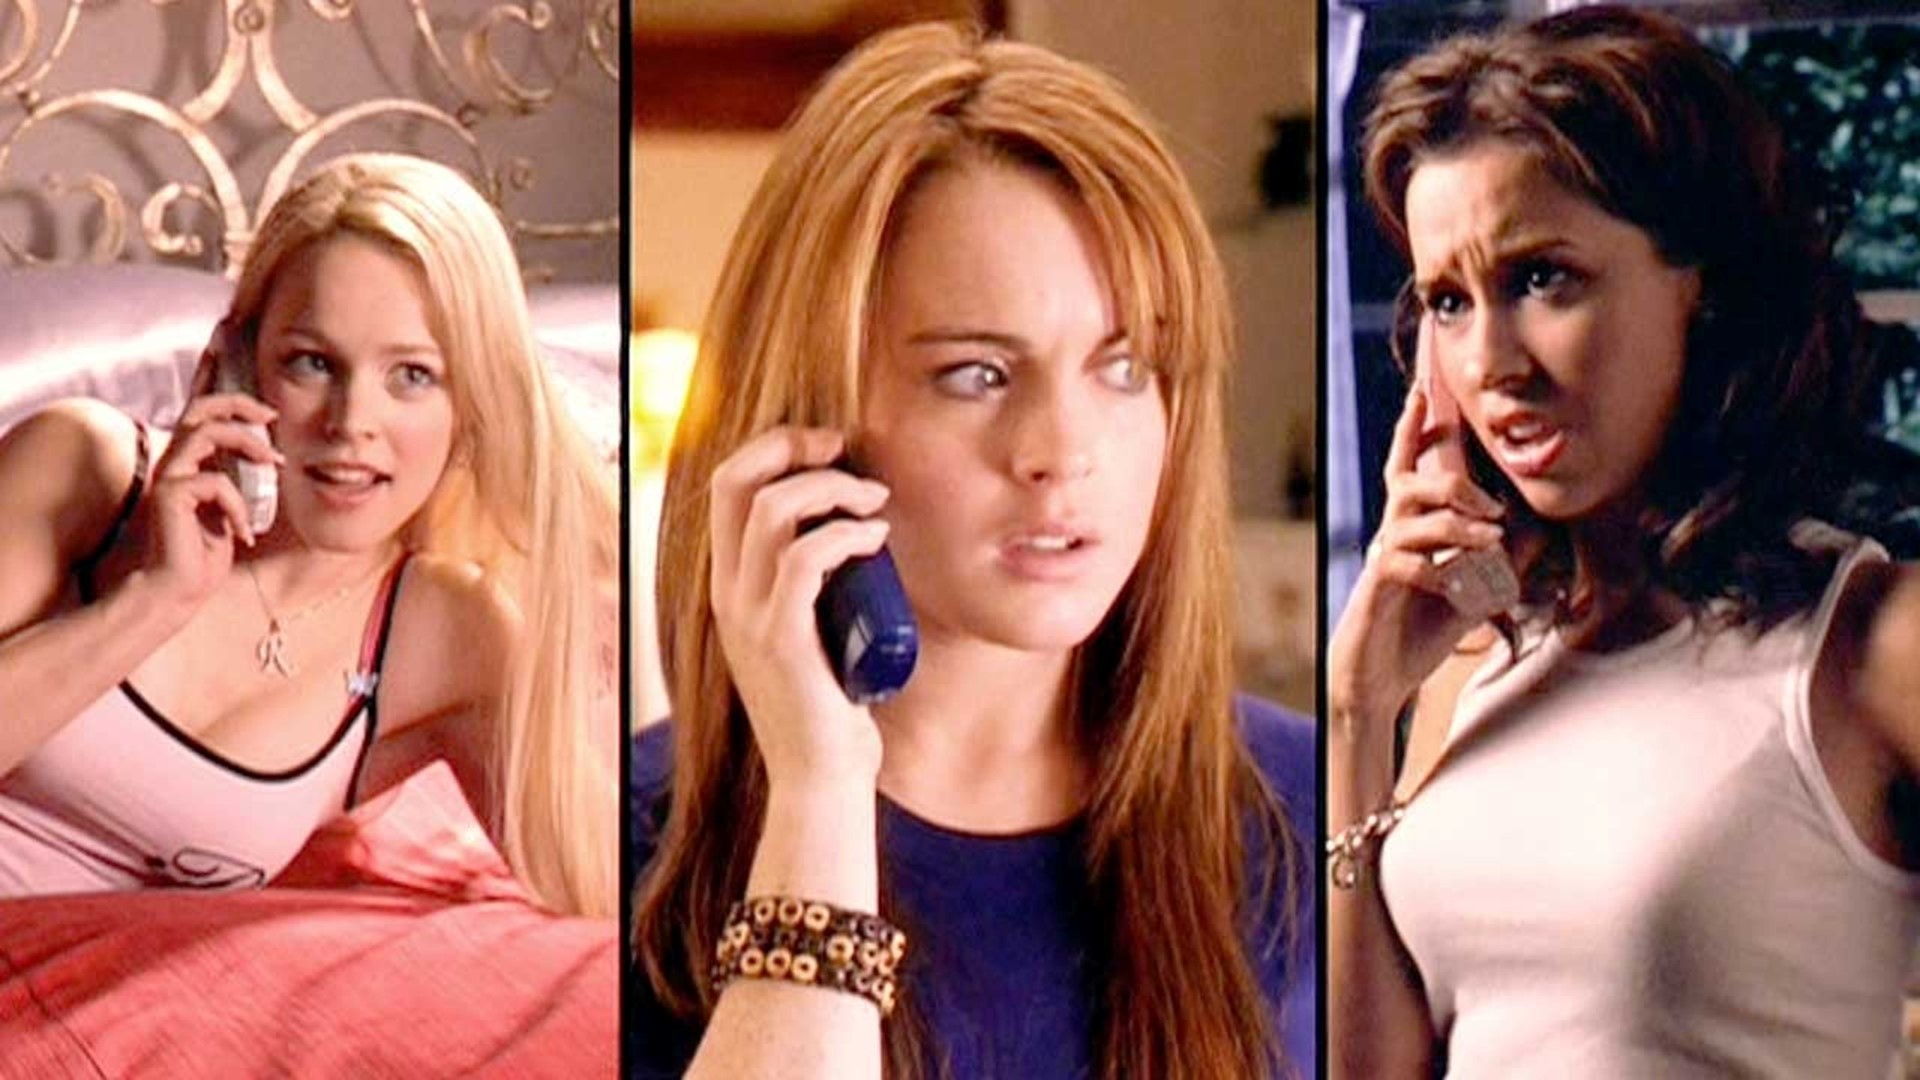 Lindsay Lohan Rachel Mcadams And Mean Girls Cast Recreate Iconic Phone Call Scene